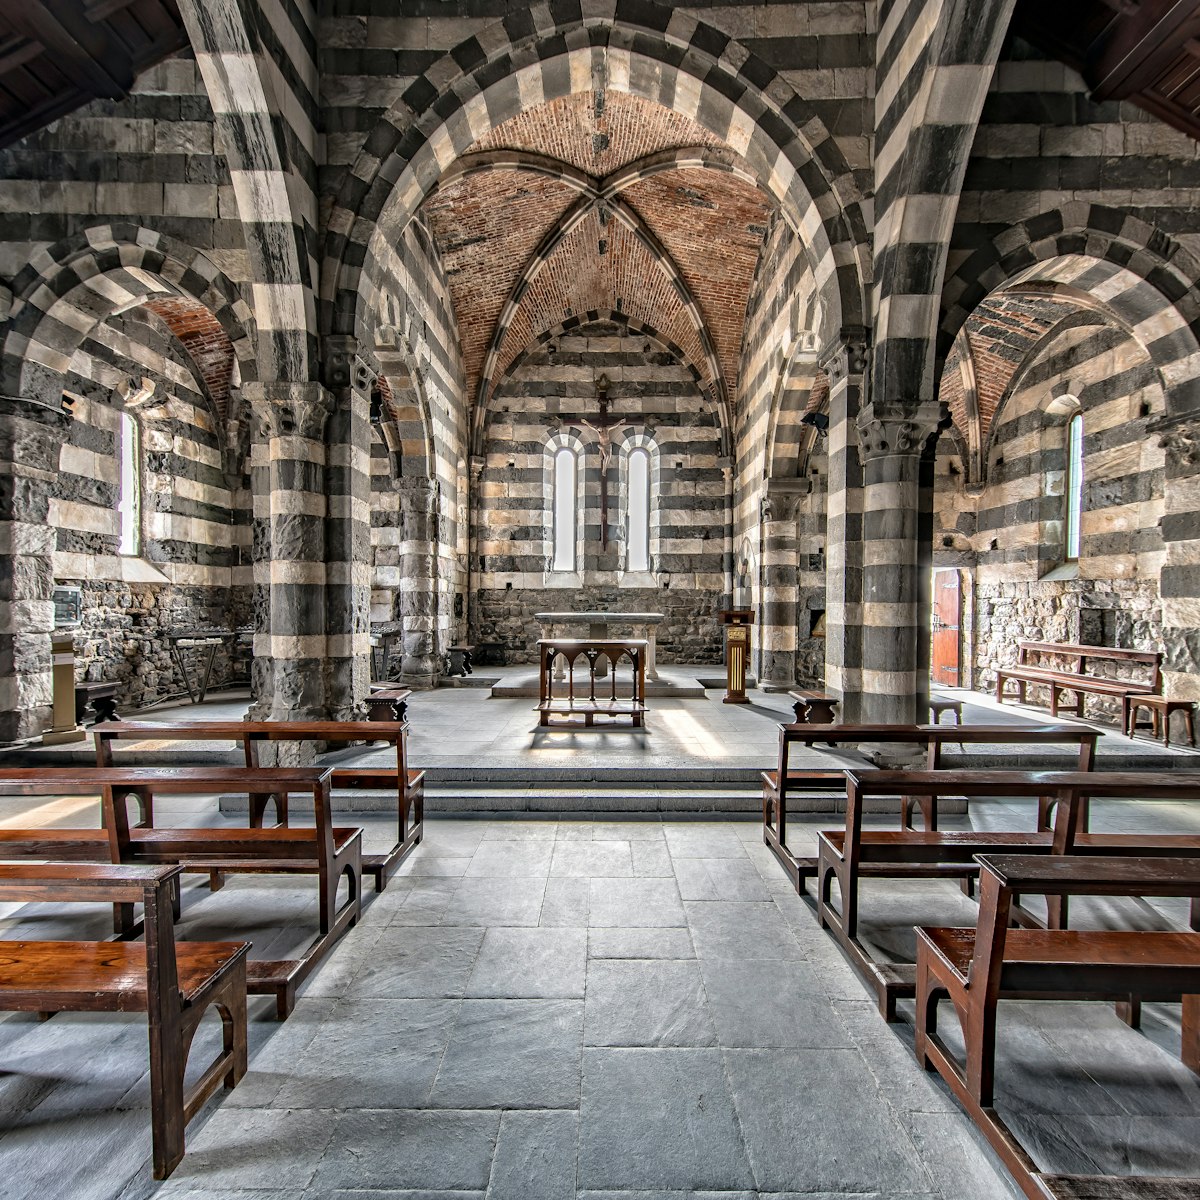 Inside San Pietro church in Portovenere.
